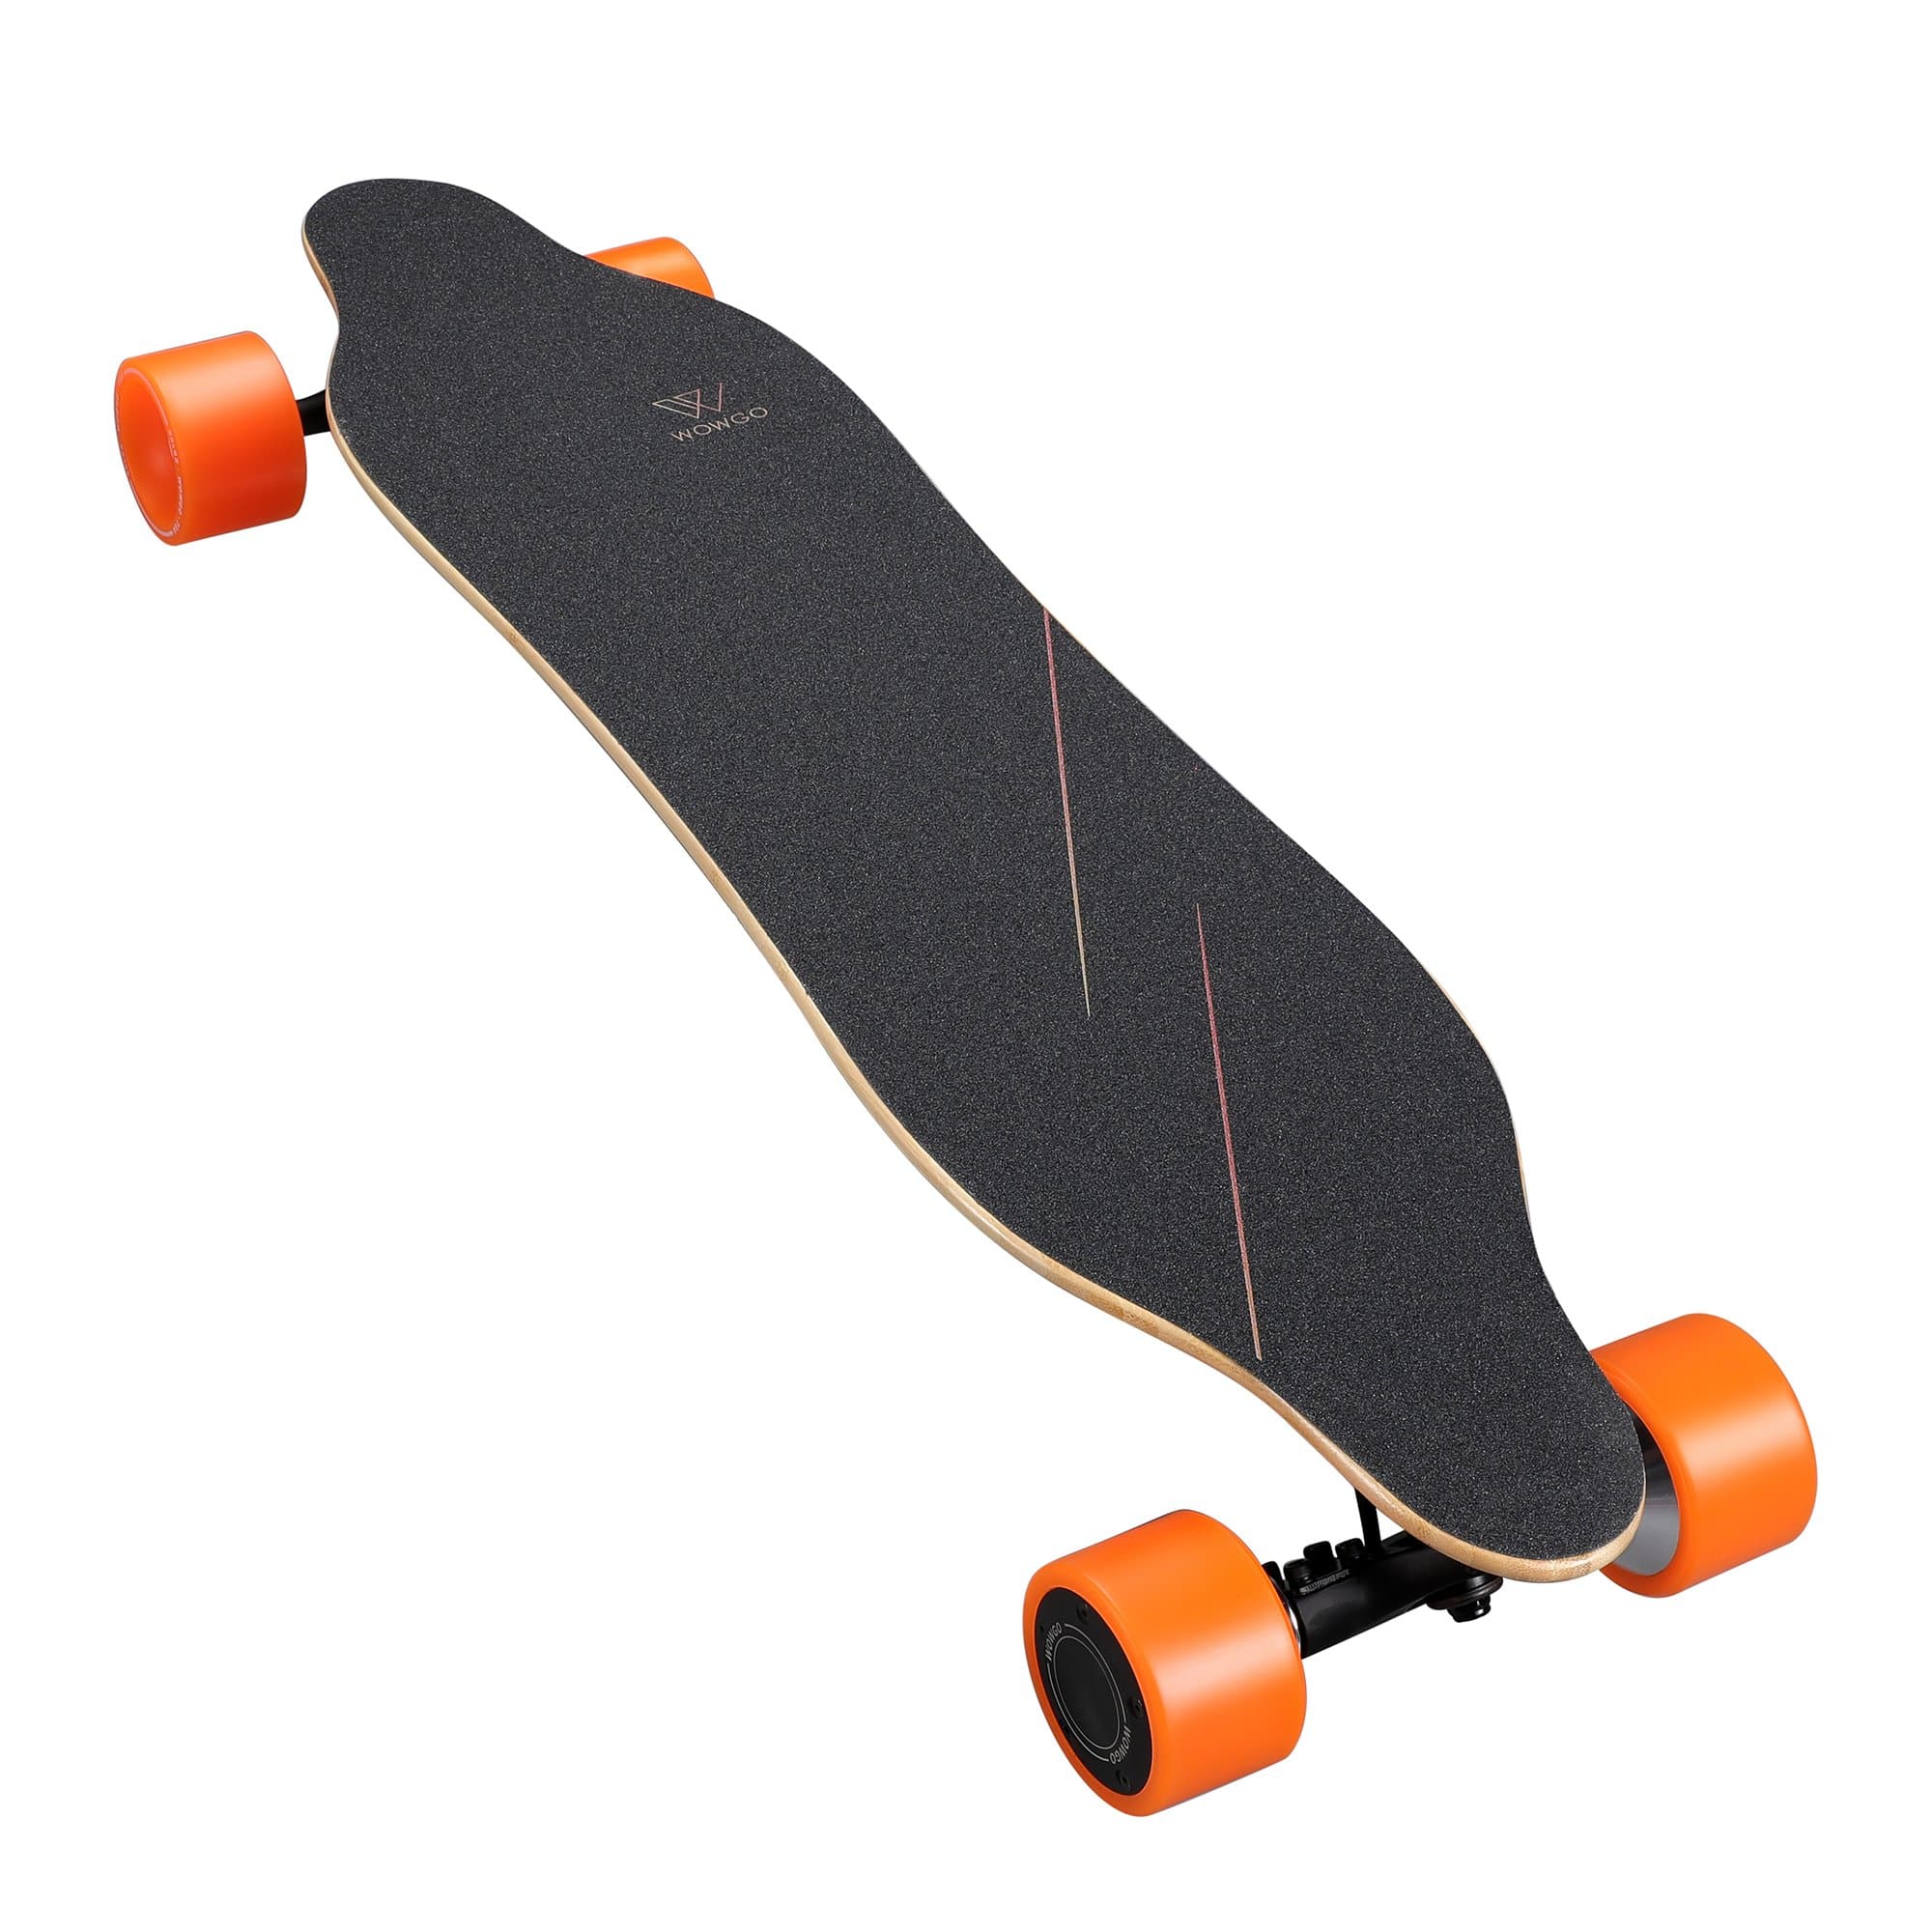 WowGo 3 Electric Skateboard & Longboard - WOWGO BOARD